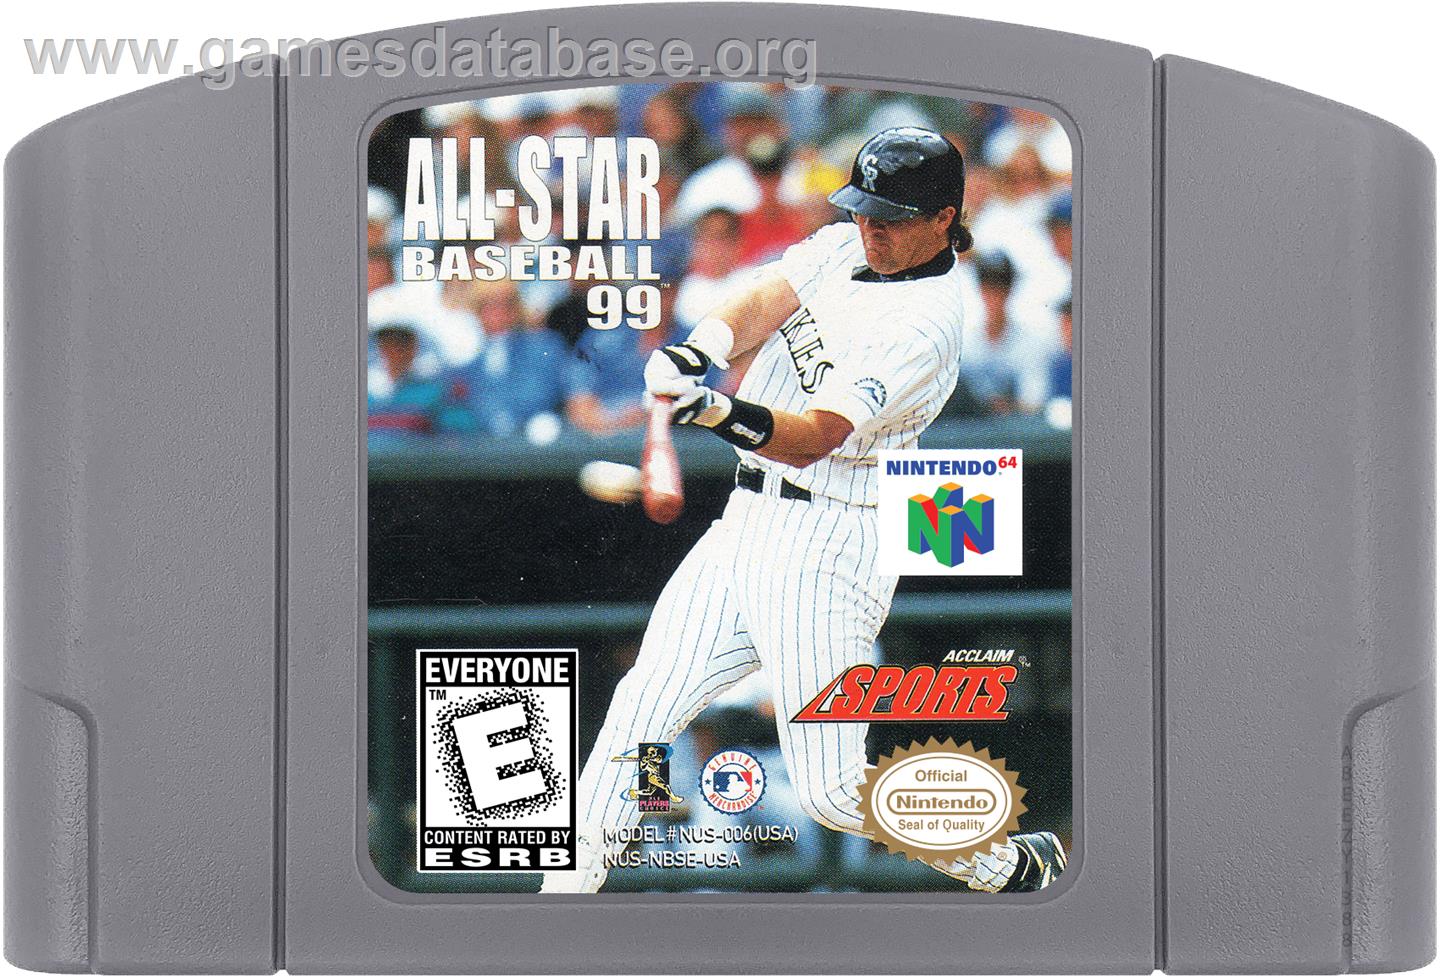 All-Star Baseball '99 - Nintendo N64 - Artwork - Cartridge